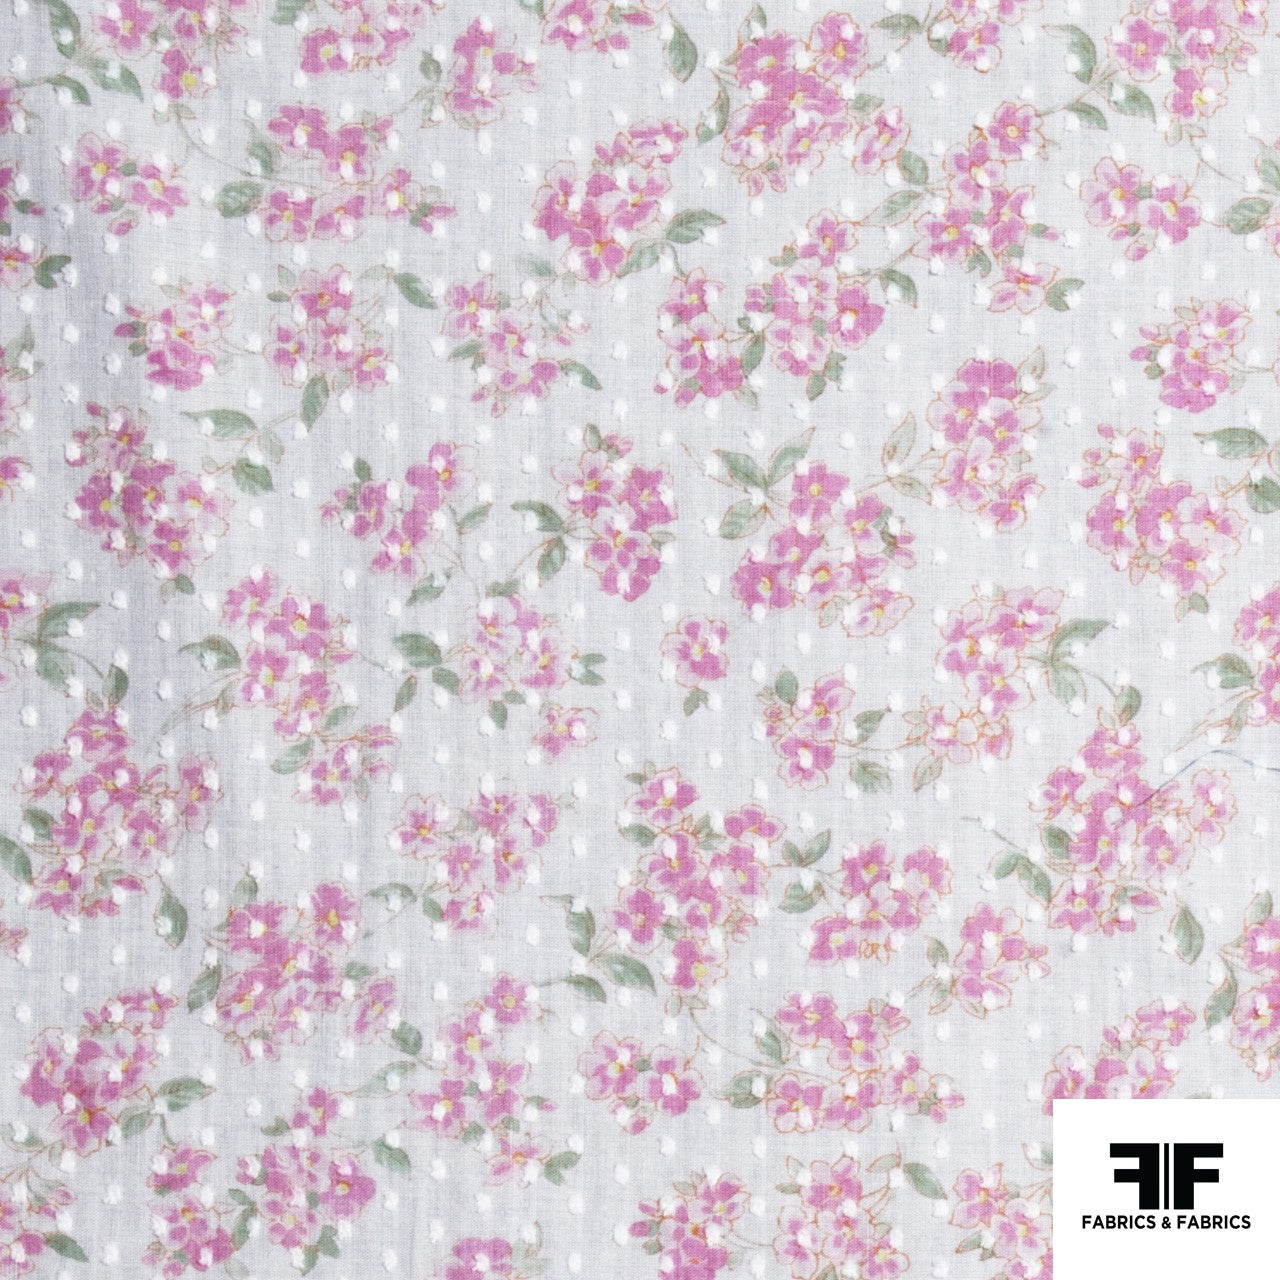 Floral and Swiss Dot Printed Cotton - Pink/White - Fabrics & Fabrics NY